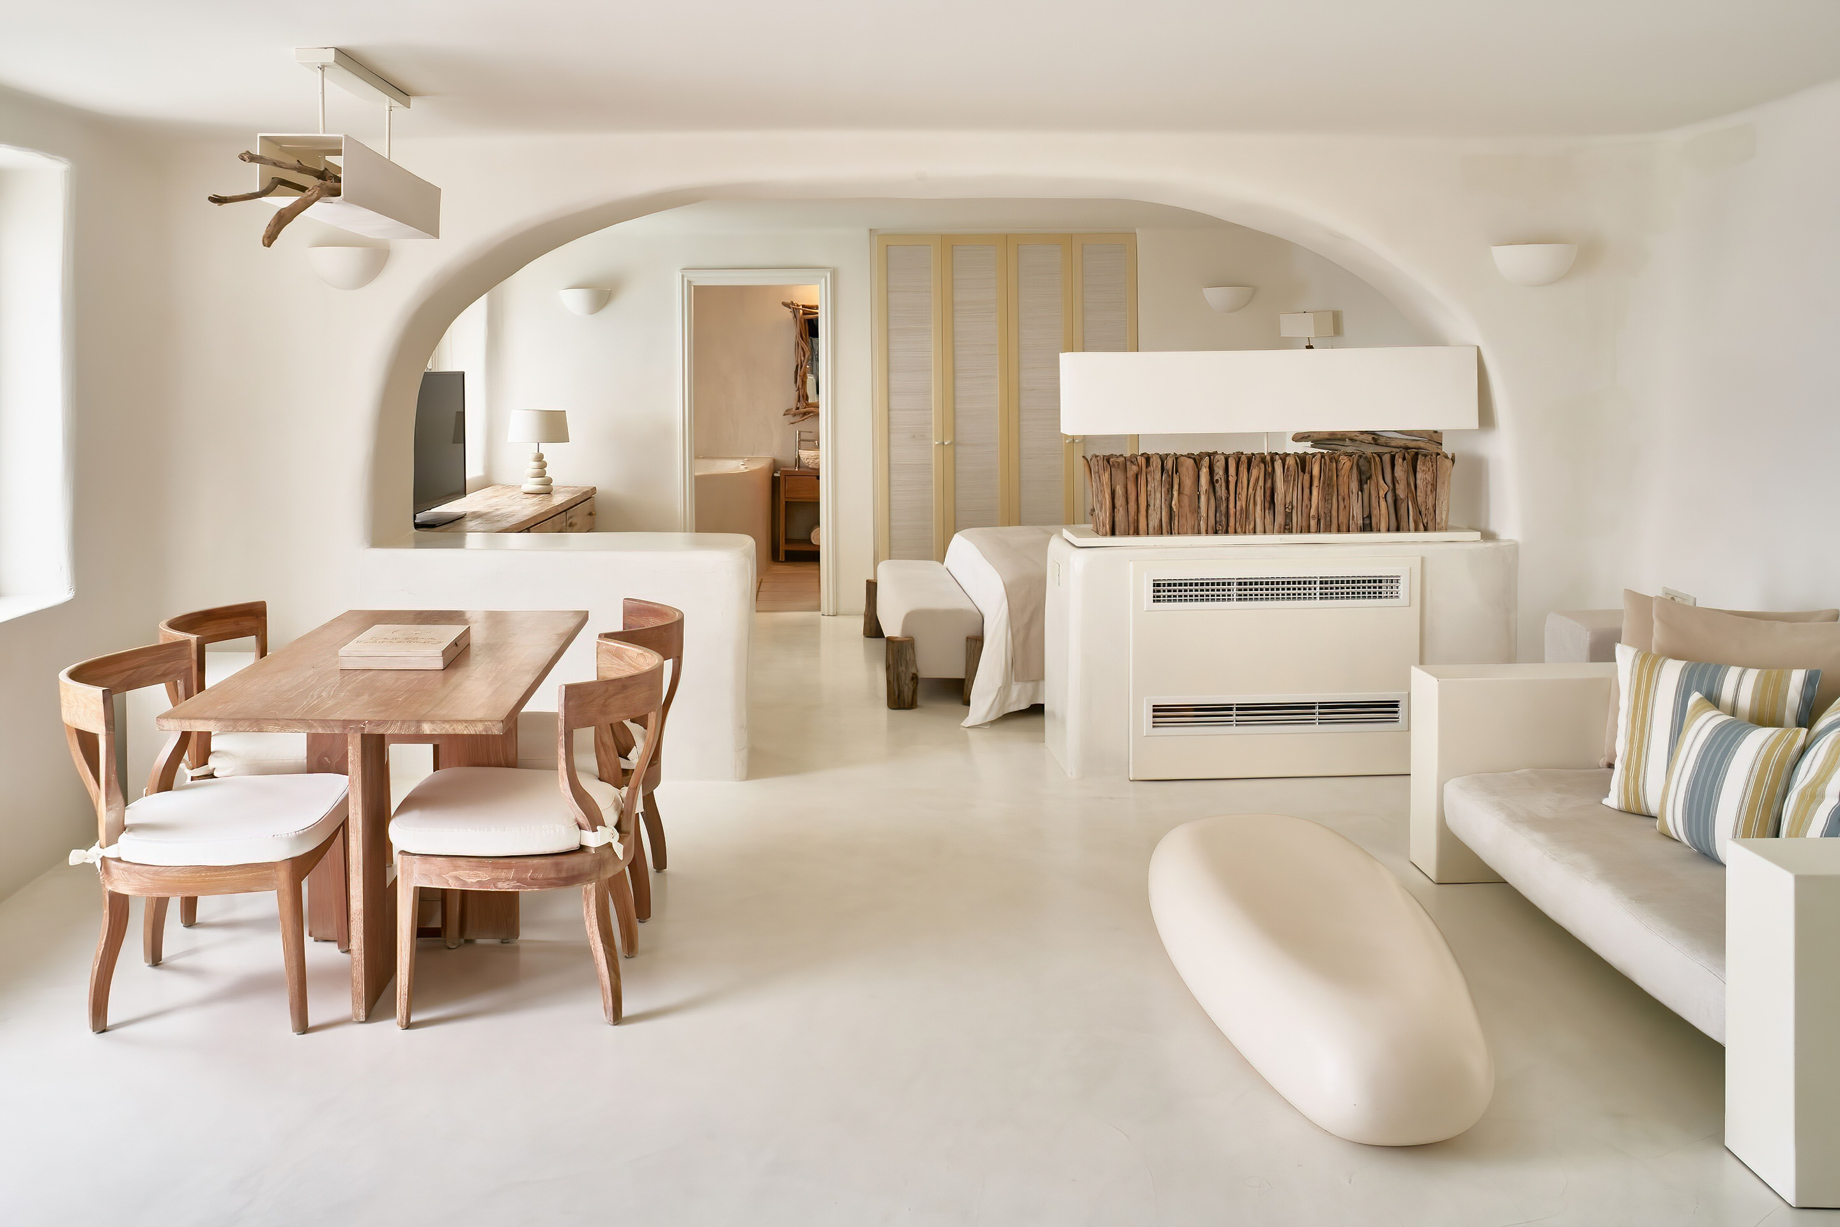 Mystique Hotel Santorini – Oia, Santorini Island, Greece – Secrecy Villa Living Room